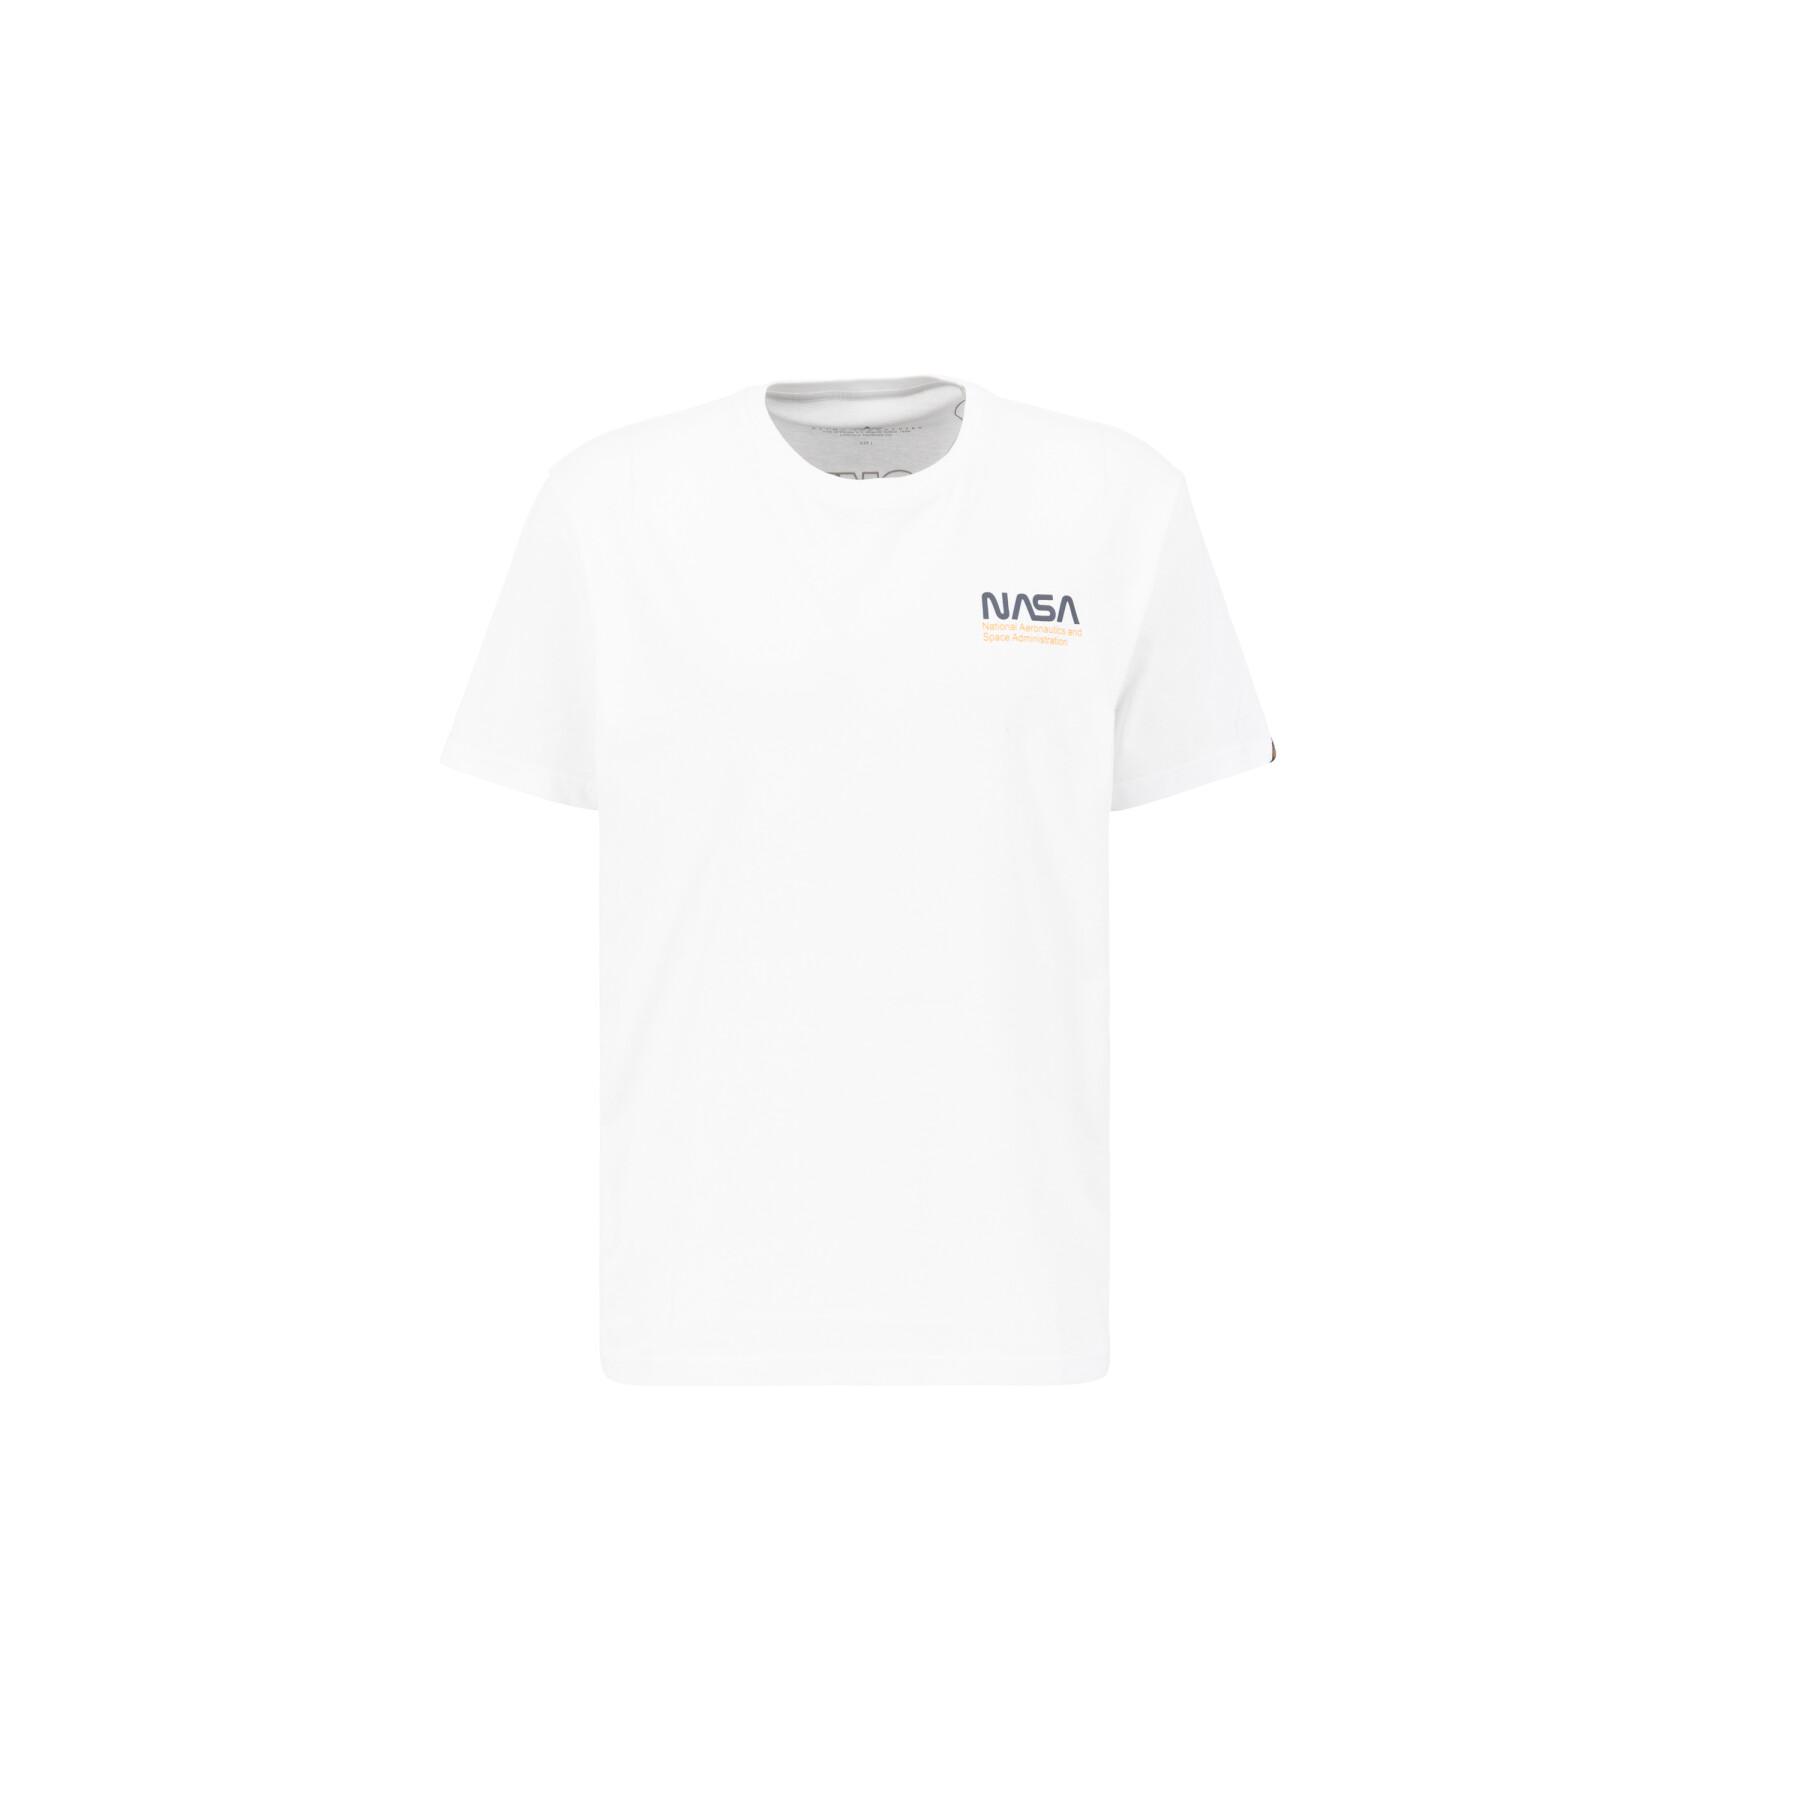 T-shirts Clothing Skylab Polo NASA Industries shirts - T-shirt - Alpha & - Men